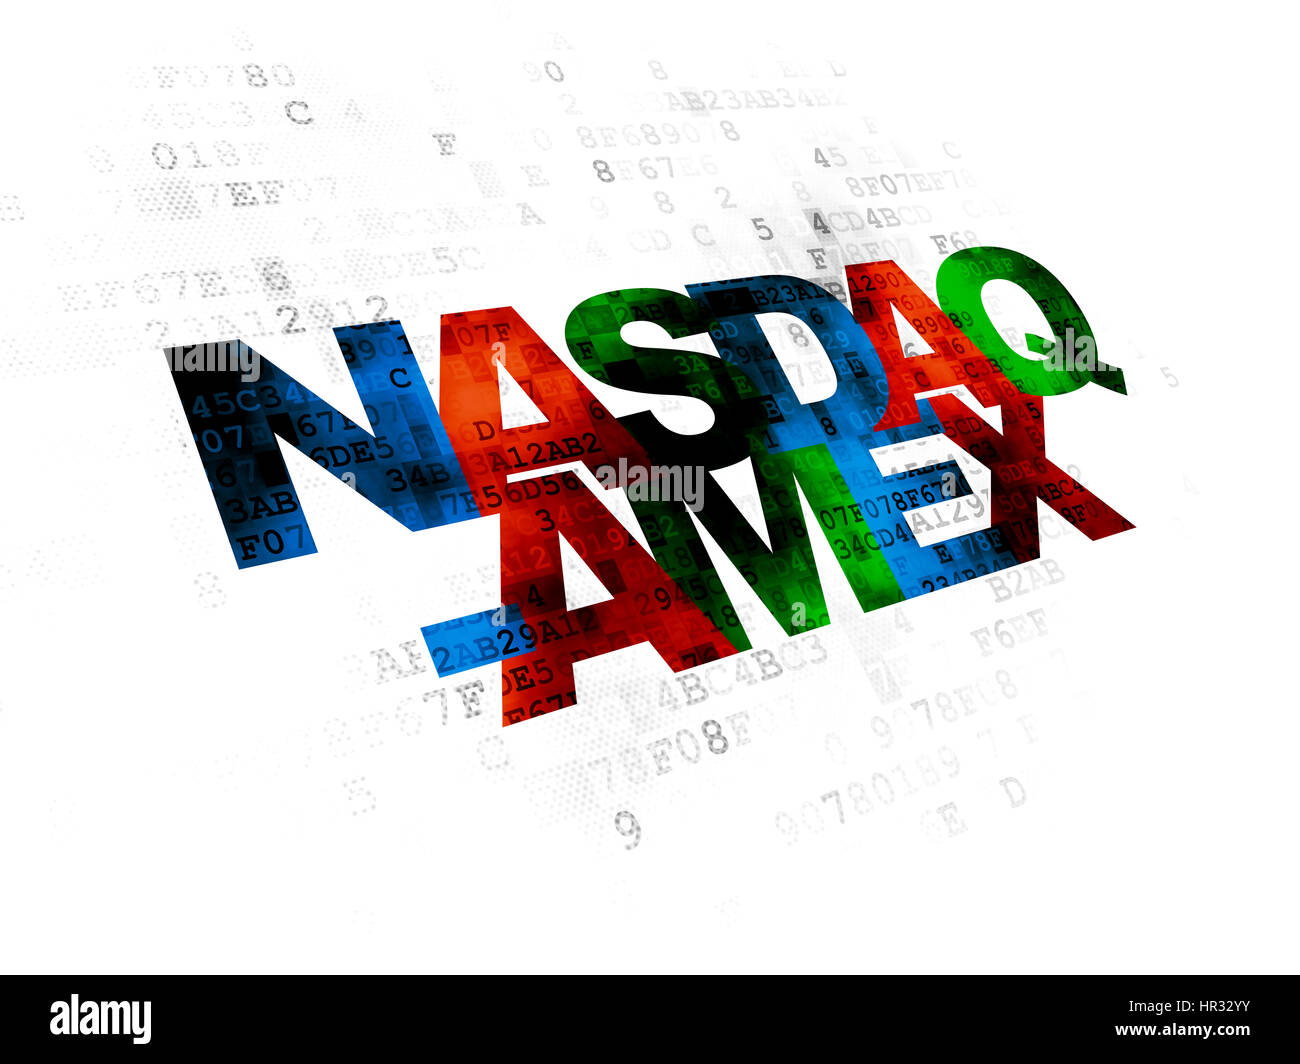 Stock market indexes concept: NASDAQ-AMEX on Digital background Stock Photo